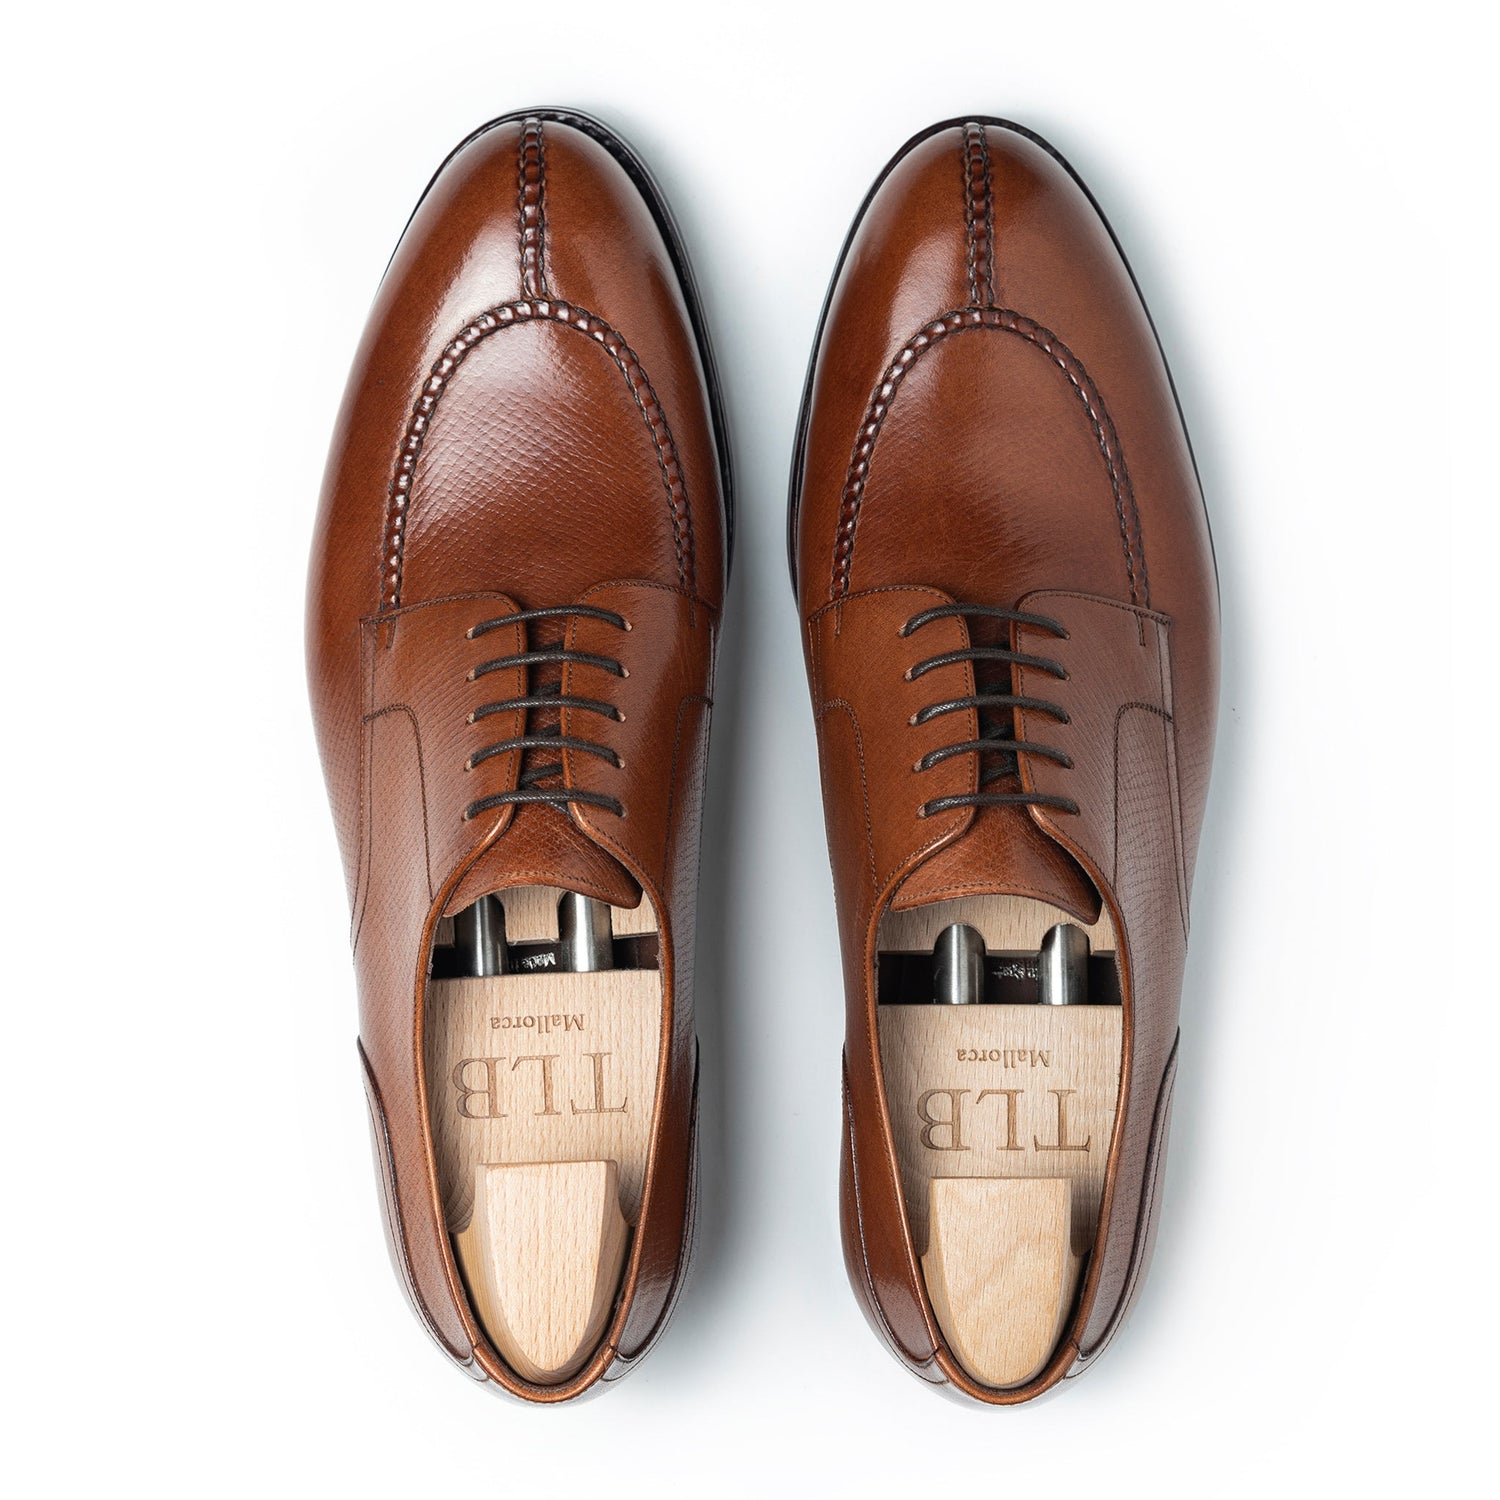 TLB Mallorca leather shoes - Men's derby shoes